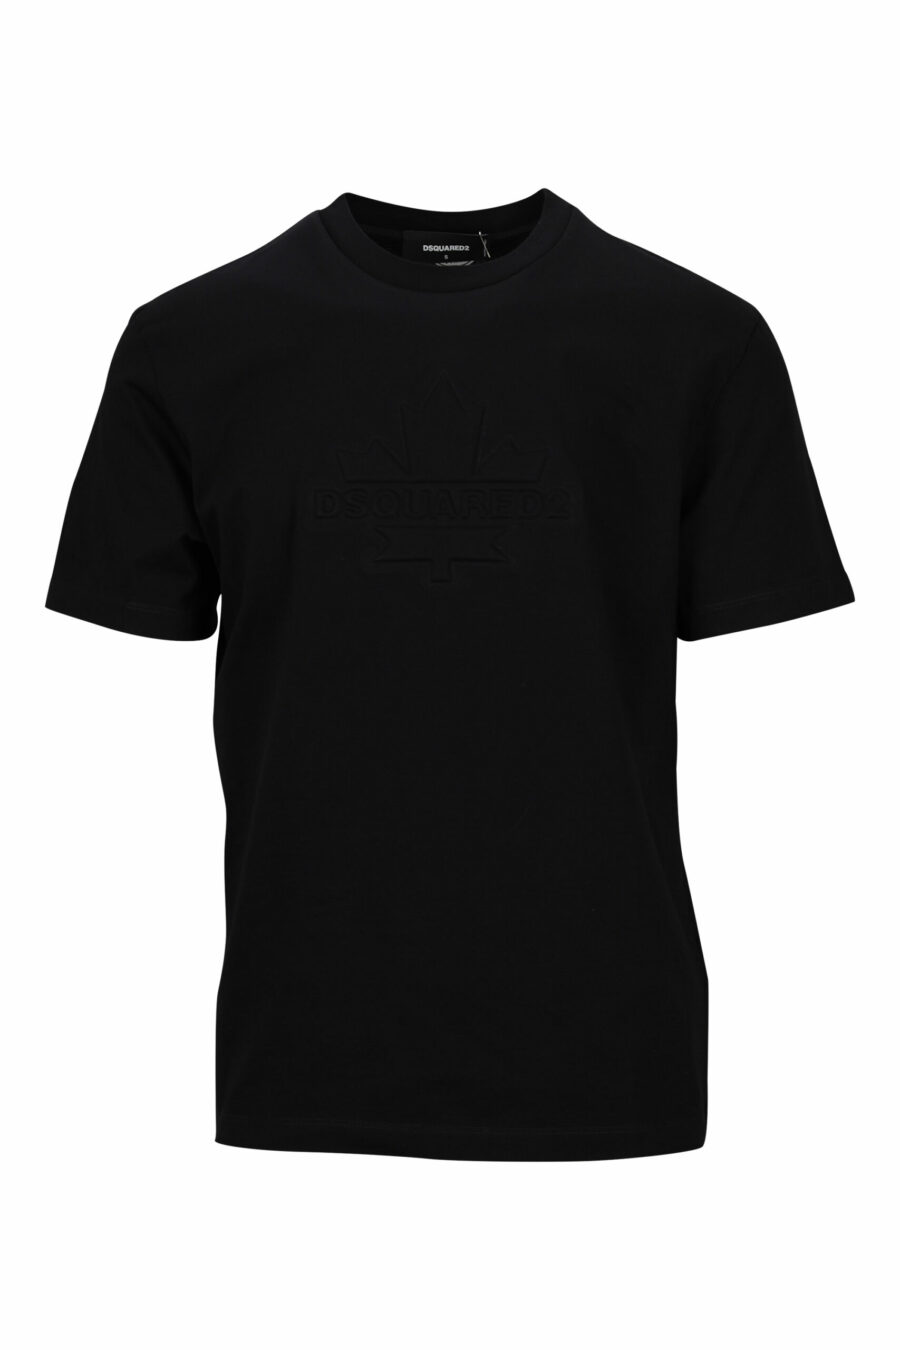 Black T-shirt with monochrome embossed leaf maxilogo - 8054148265908 scaled